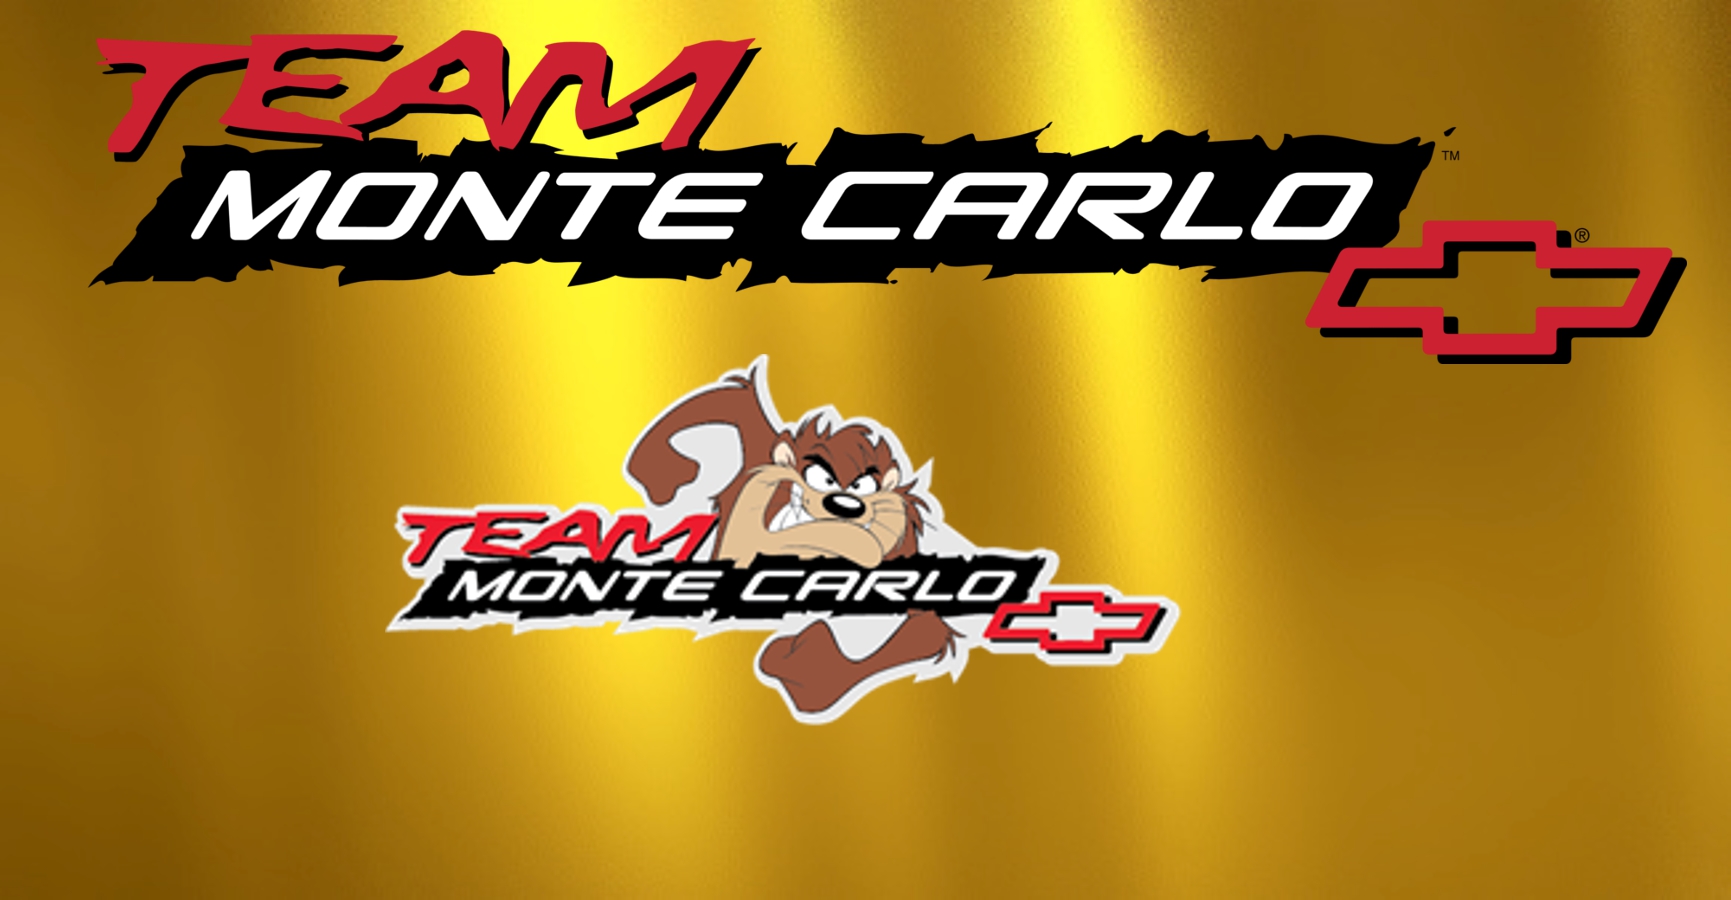 Team Monte Carlo.jpg